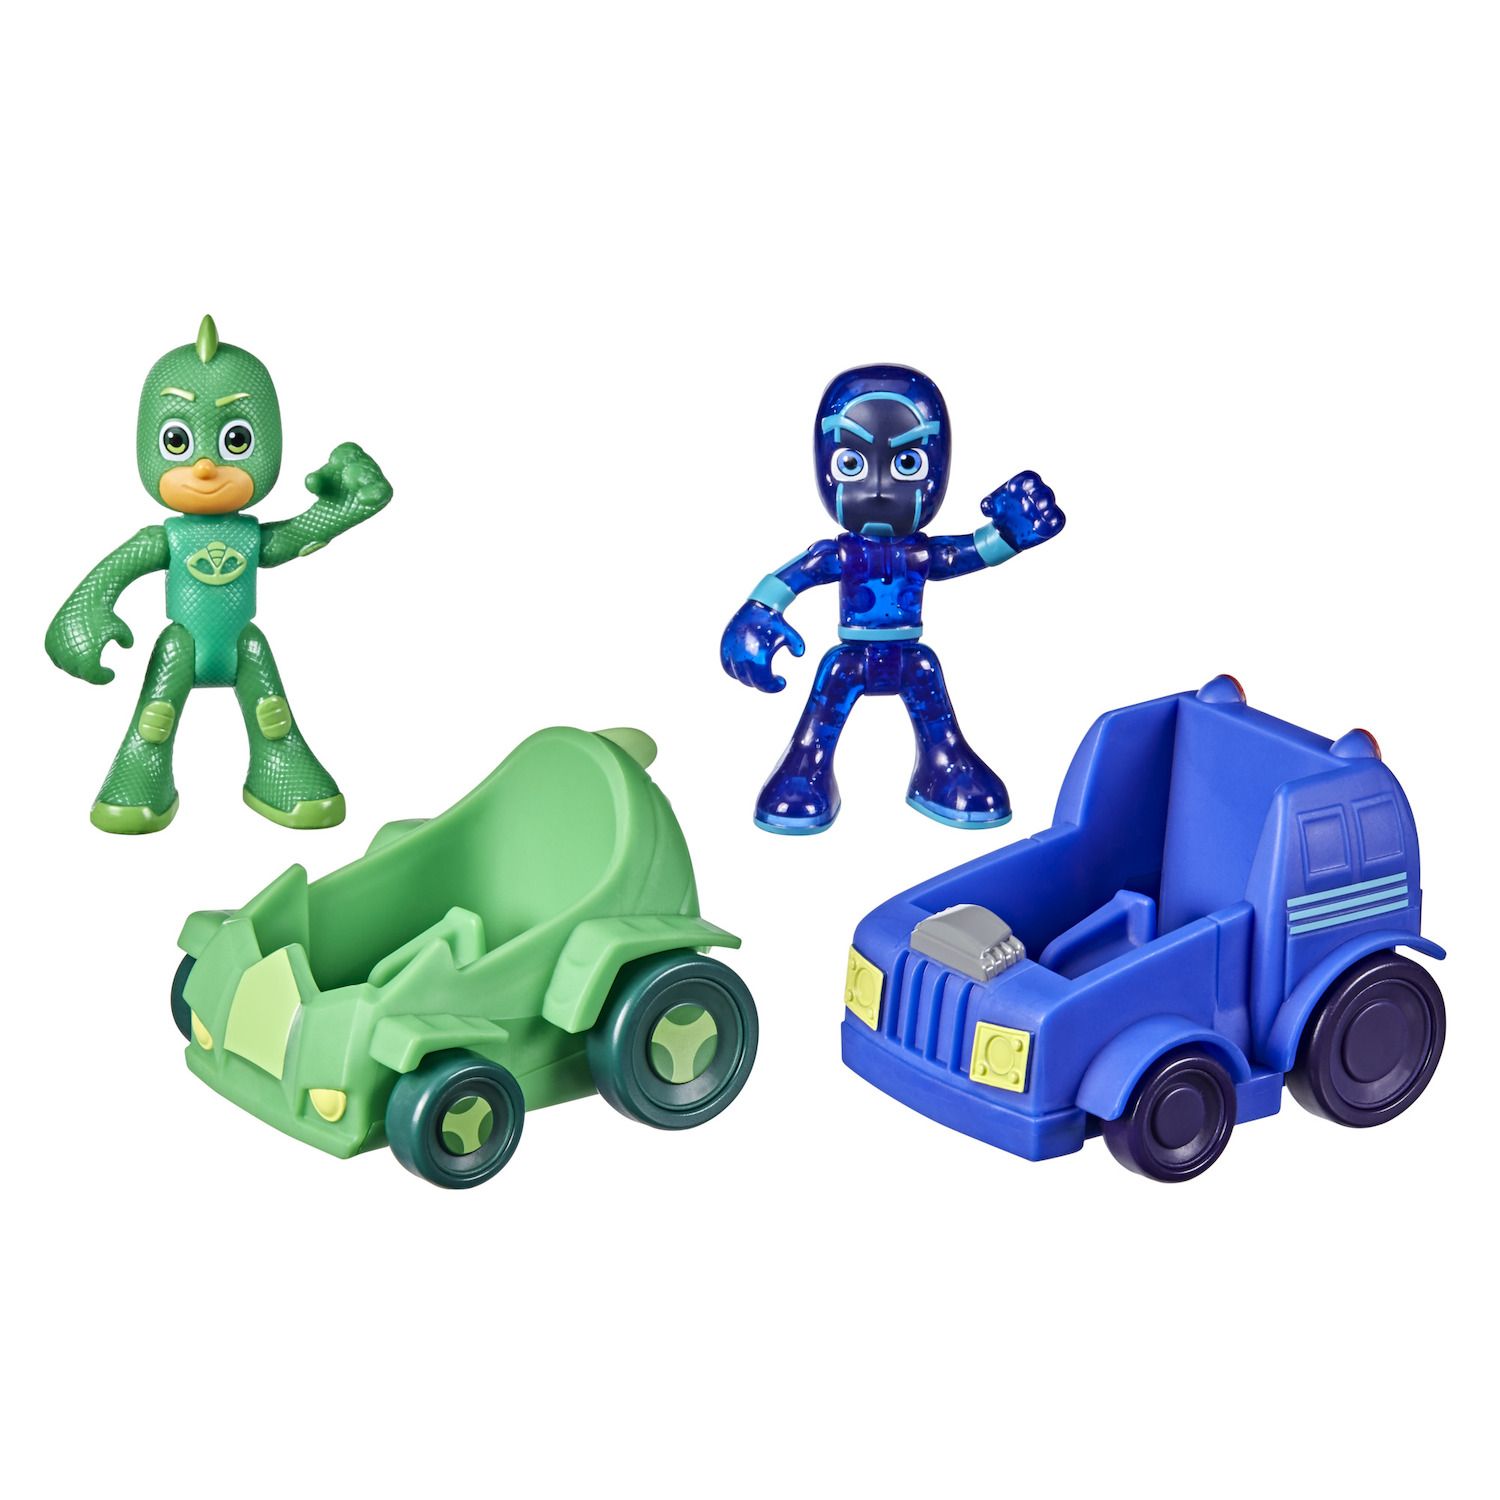 Image for Hasbro PJ Masks Gekko vs Night Ninja Action Figures and Vehicles Set by at Kohl's.